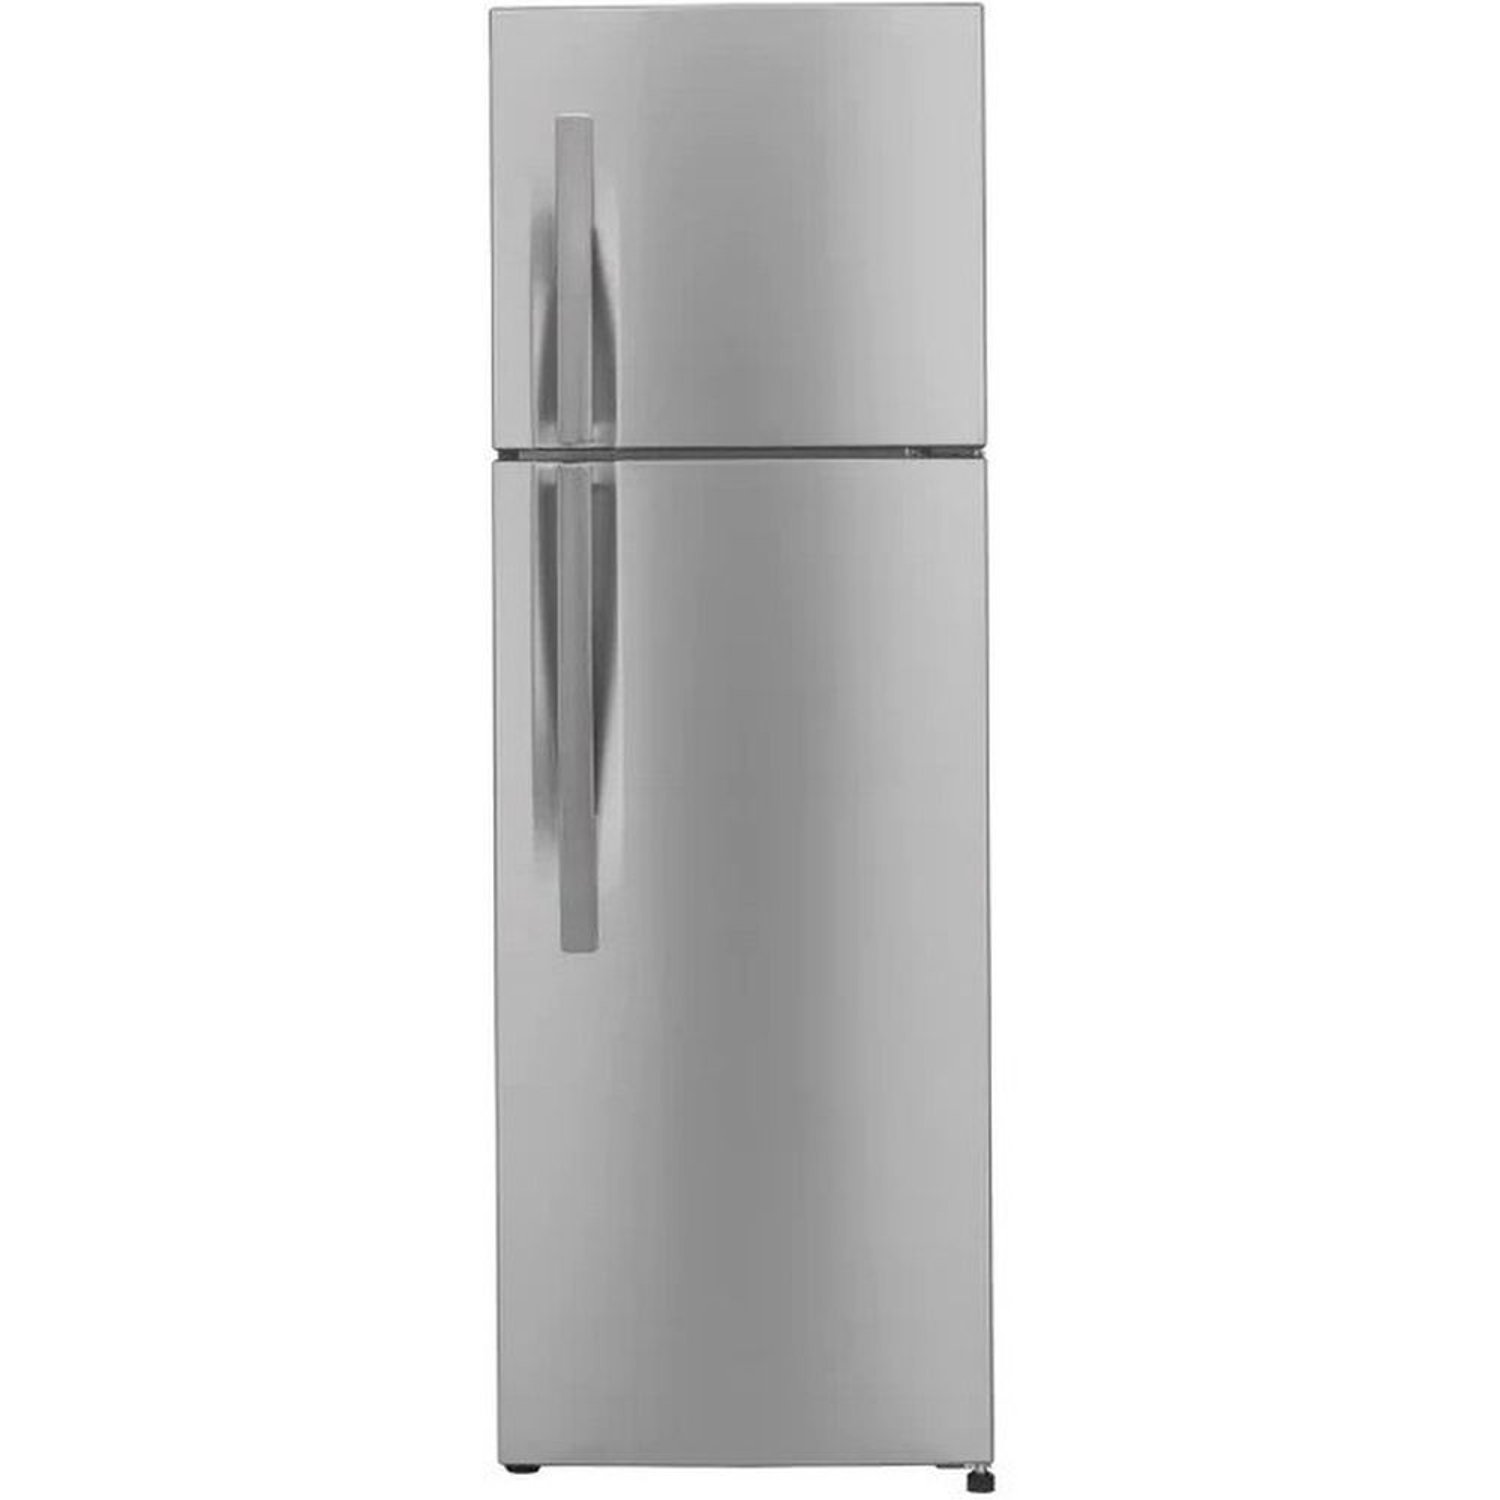 LG Refrigerator 372 Liter Silver GLG372RLBB